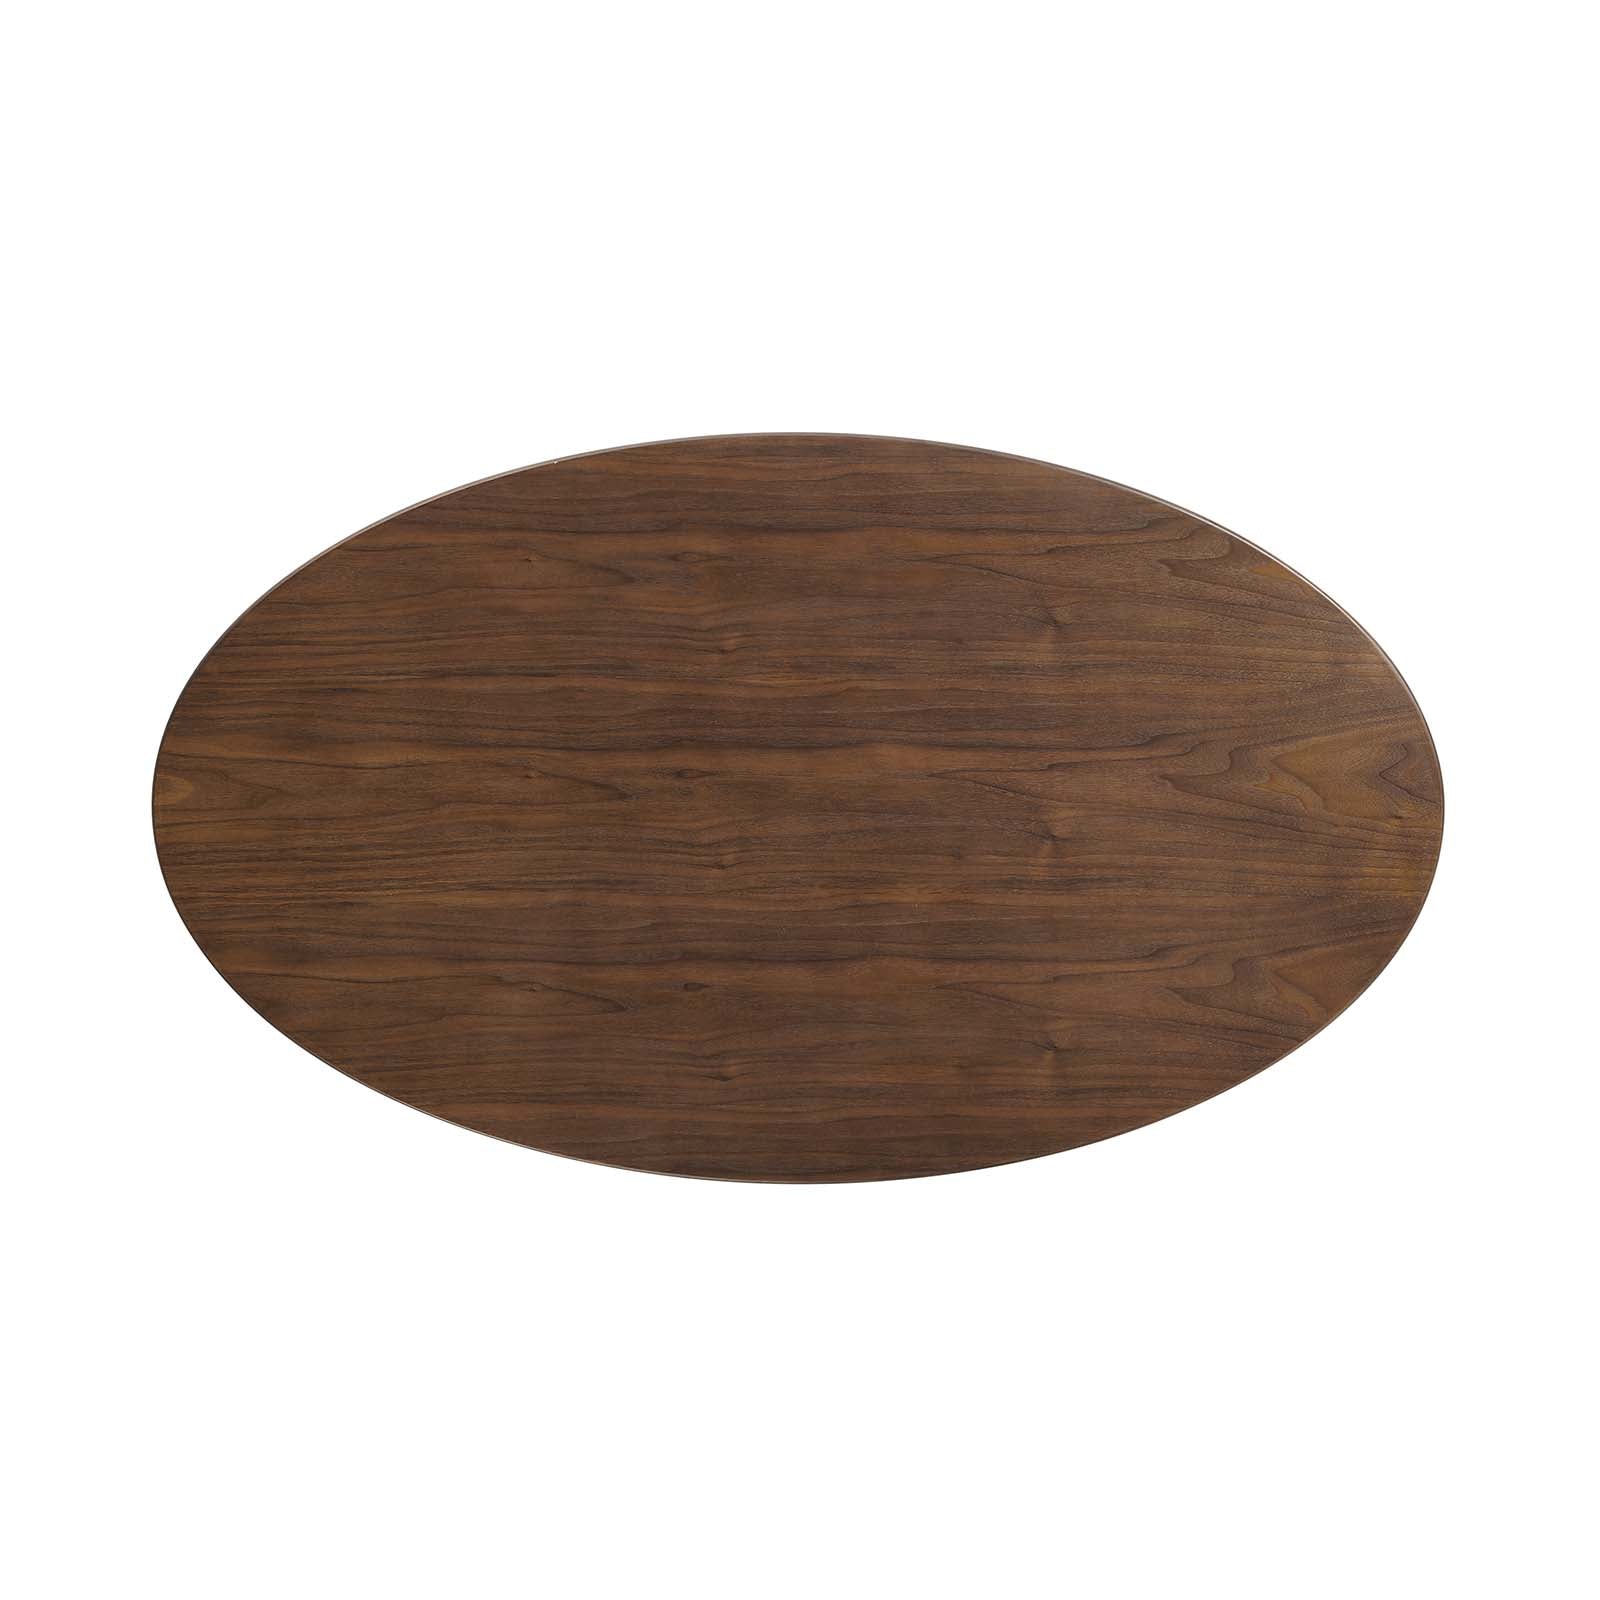 Lippa 48" Oval-Shaped Walnut Coffee Table-Coffee Table-Modway-Wall2Wall Furnishings